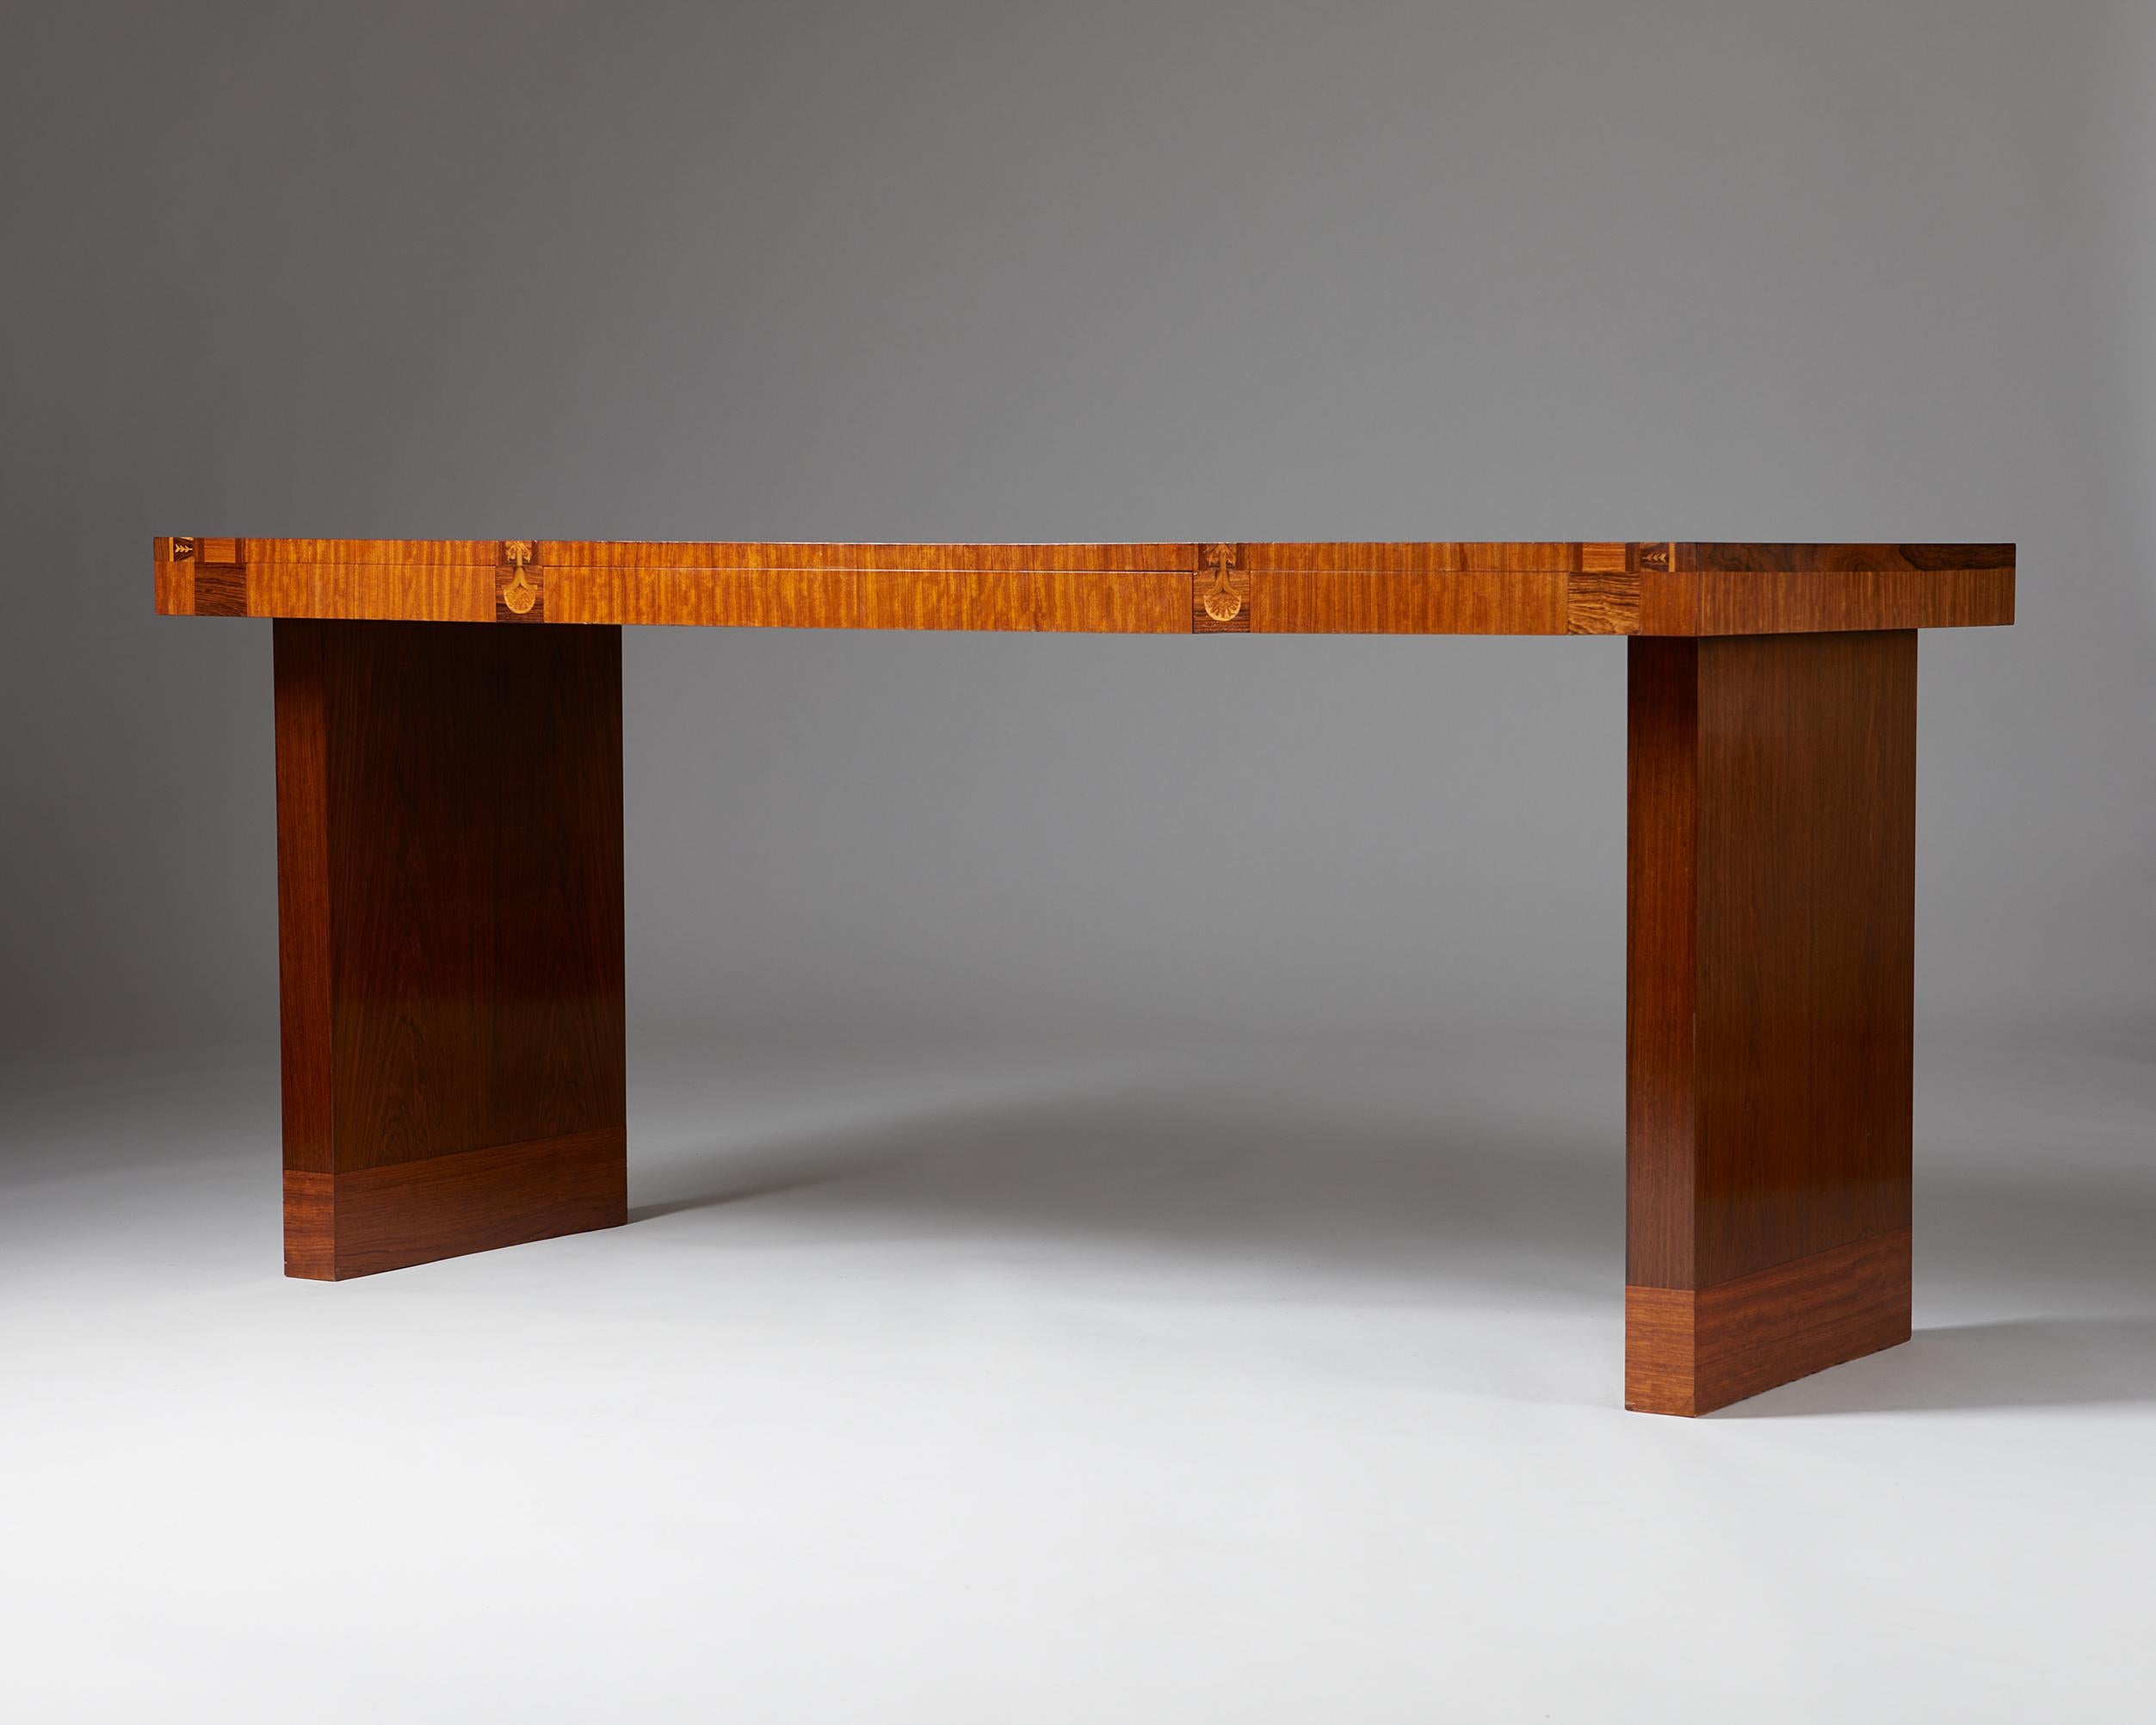 Mid-Century Modern Desk made of Mahogany and Walnut Designed by Carl Malmsten, Sweden, 1934